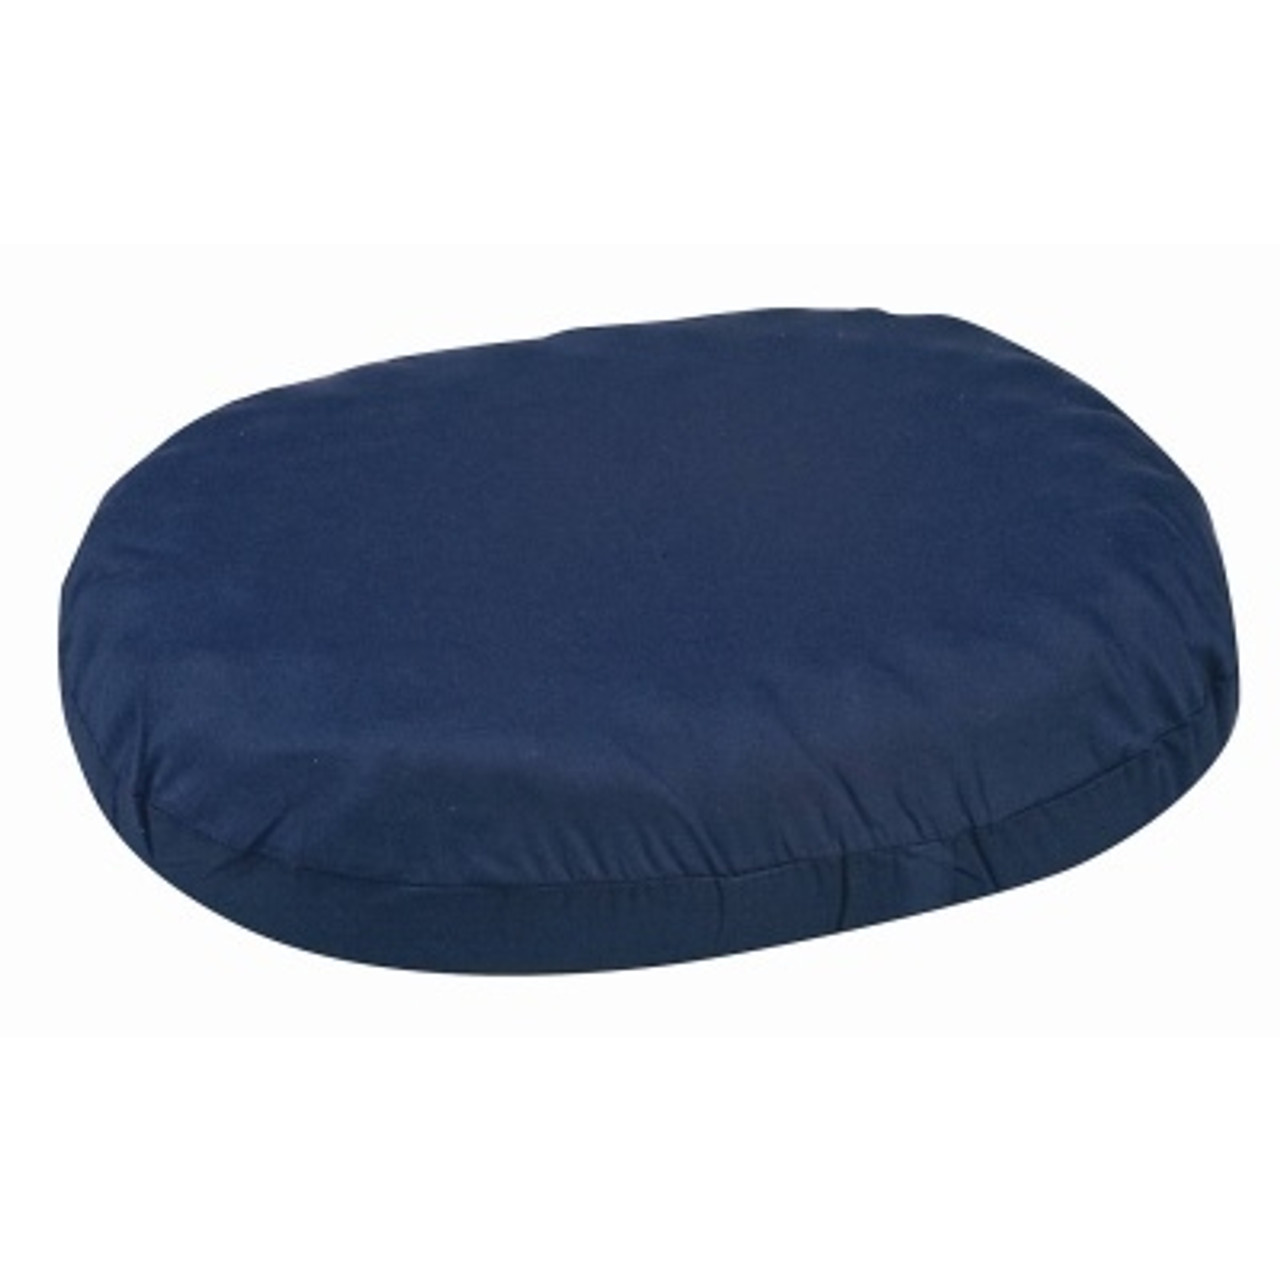 Navy Blue Contoured Foam Coccyx Seat Cushions